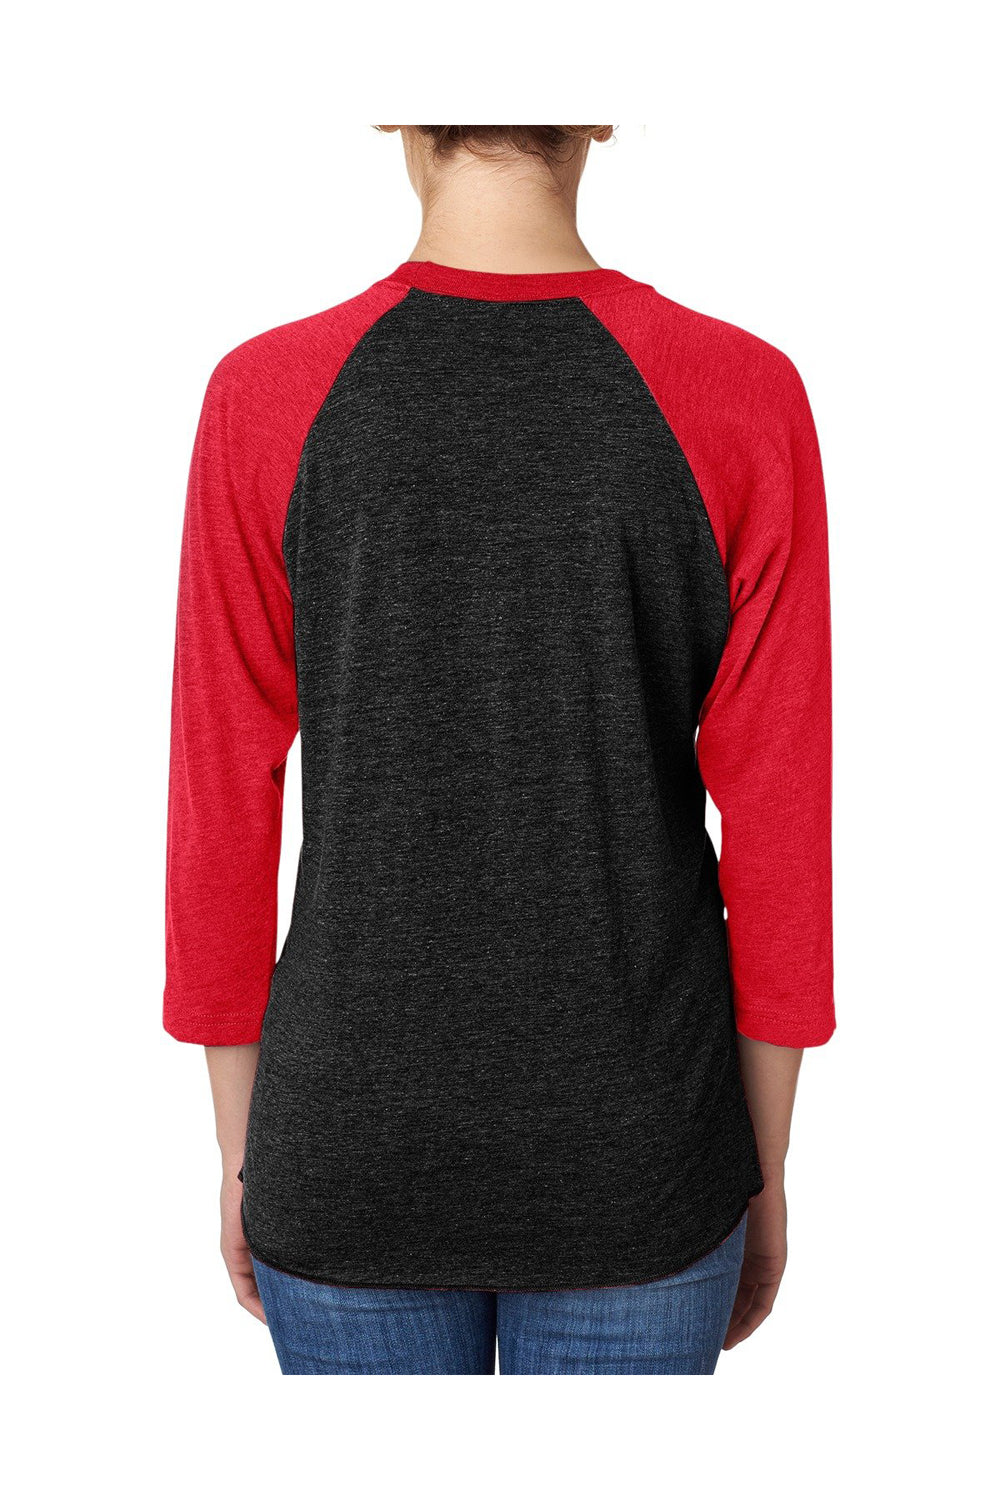 Next Level 6051 Mens Jersey 3/4 Sleeve Crewneck T-Shirt Red/Black Back